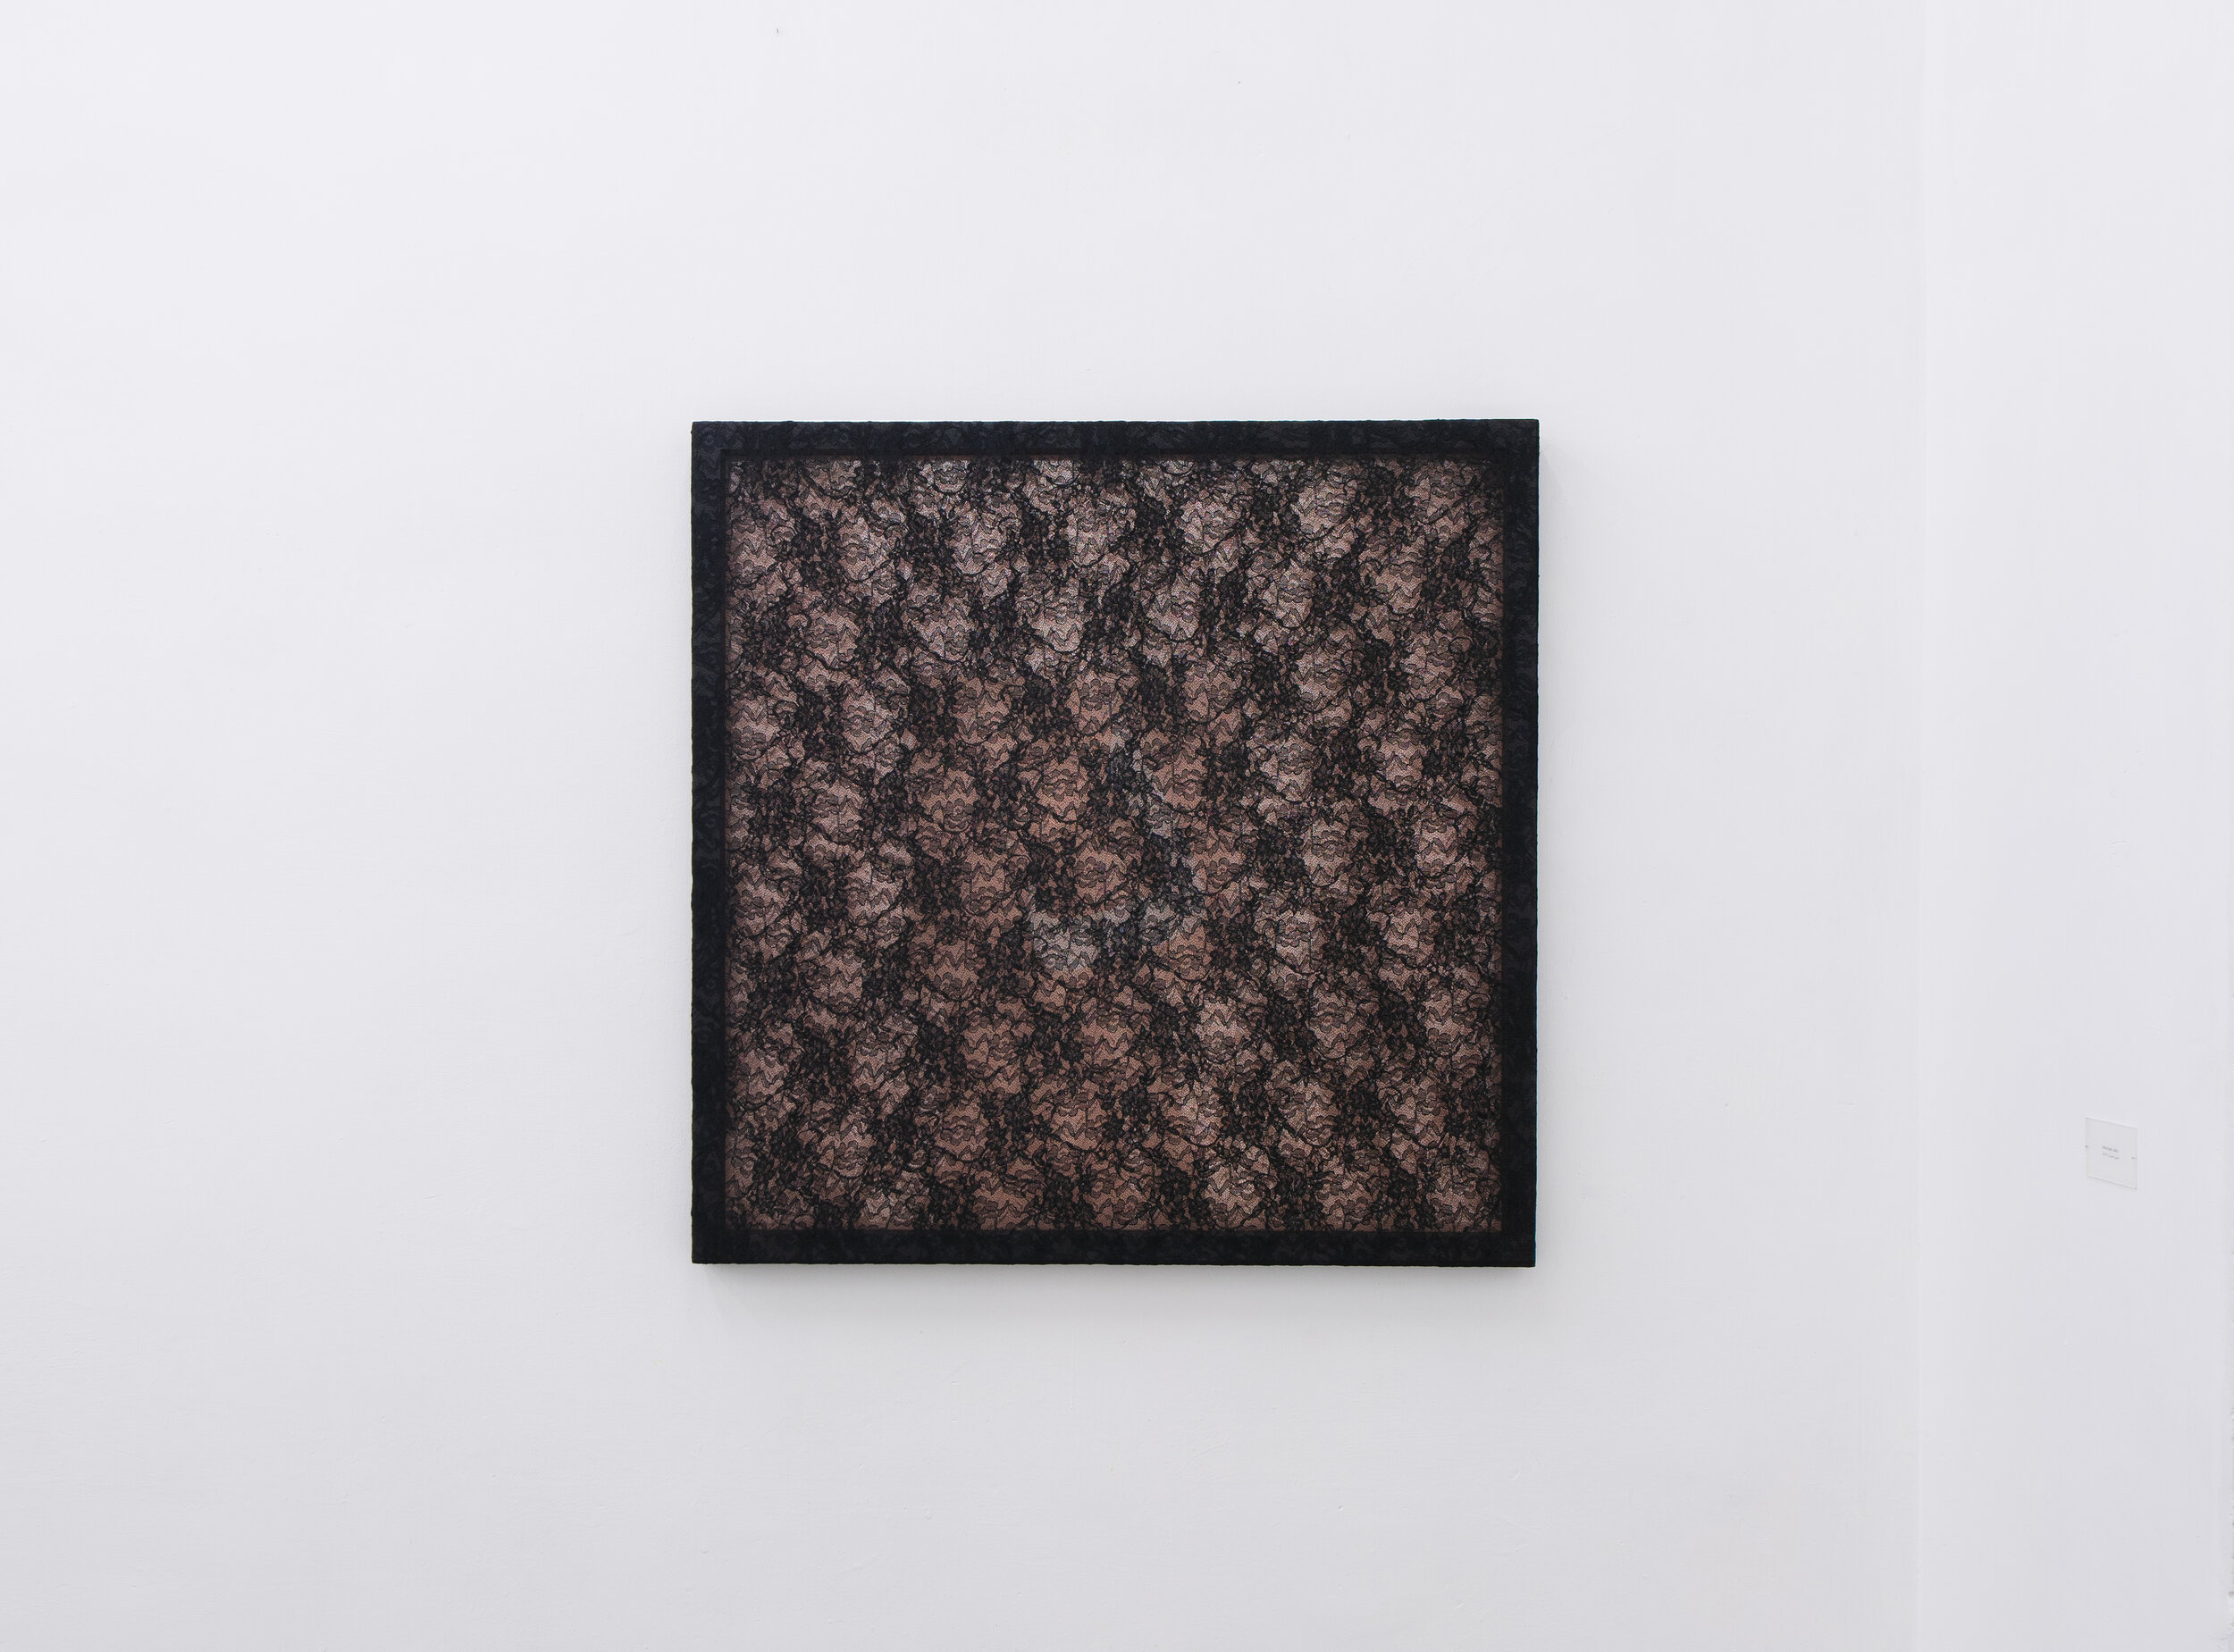  Untitled (Dȯl) 2018 Inkjet print, wooden frame, acrylic, lace 80 x 80 x 4.5 cm  (بدون عنوان (دال 